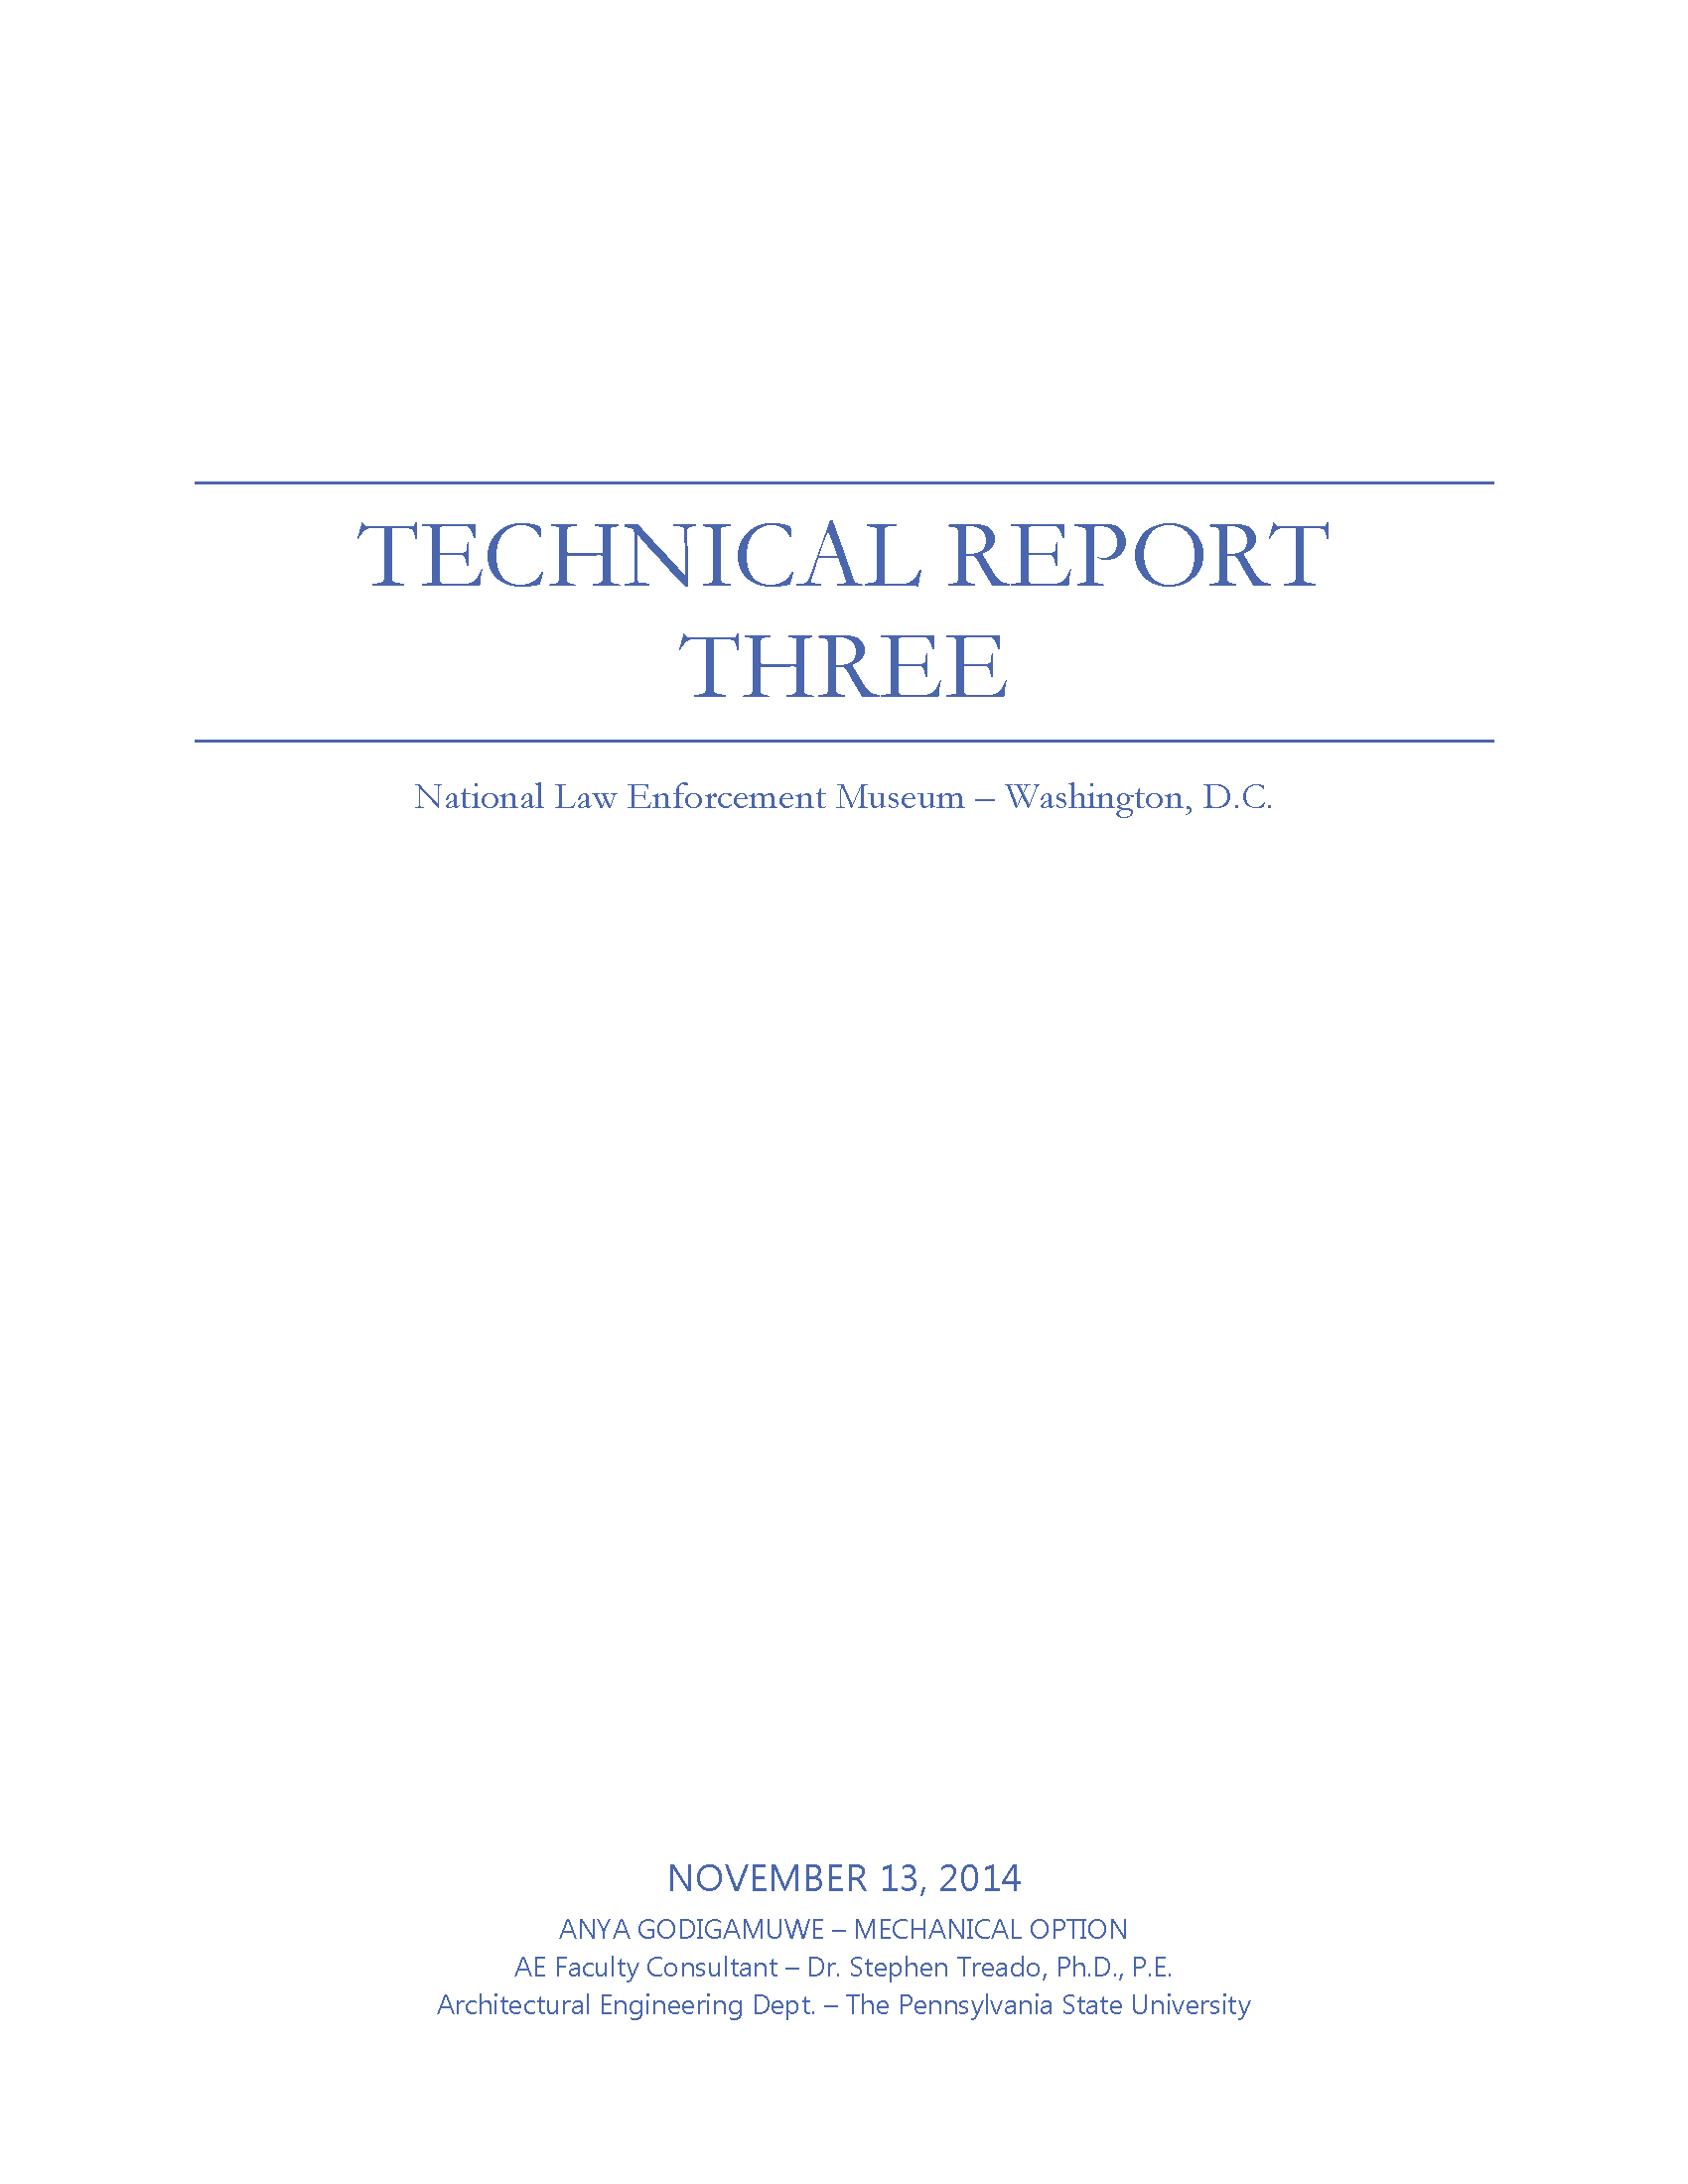 Technical Report Three